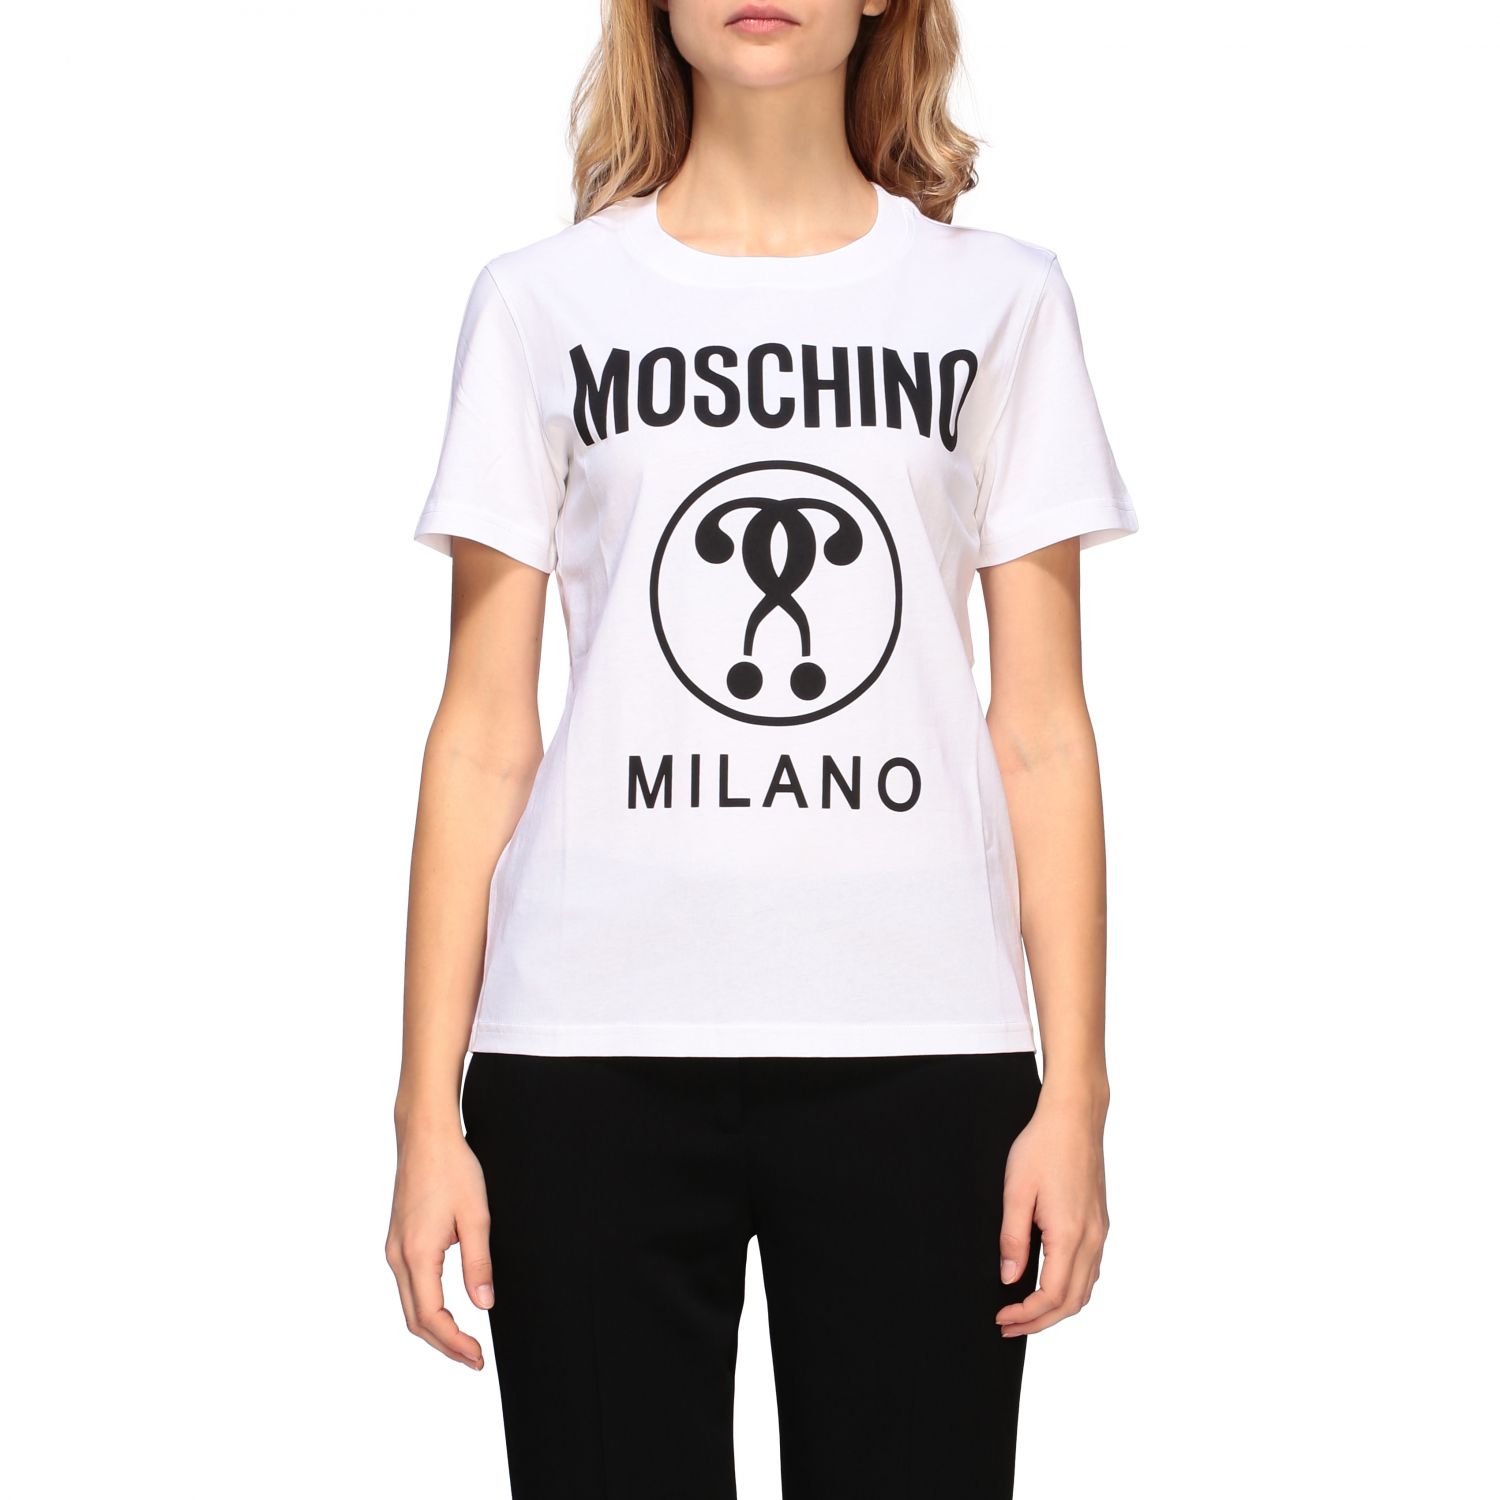 moschino shorts and t shirt